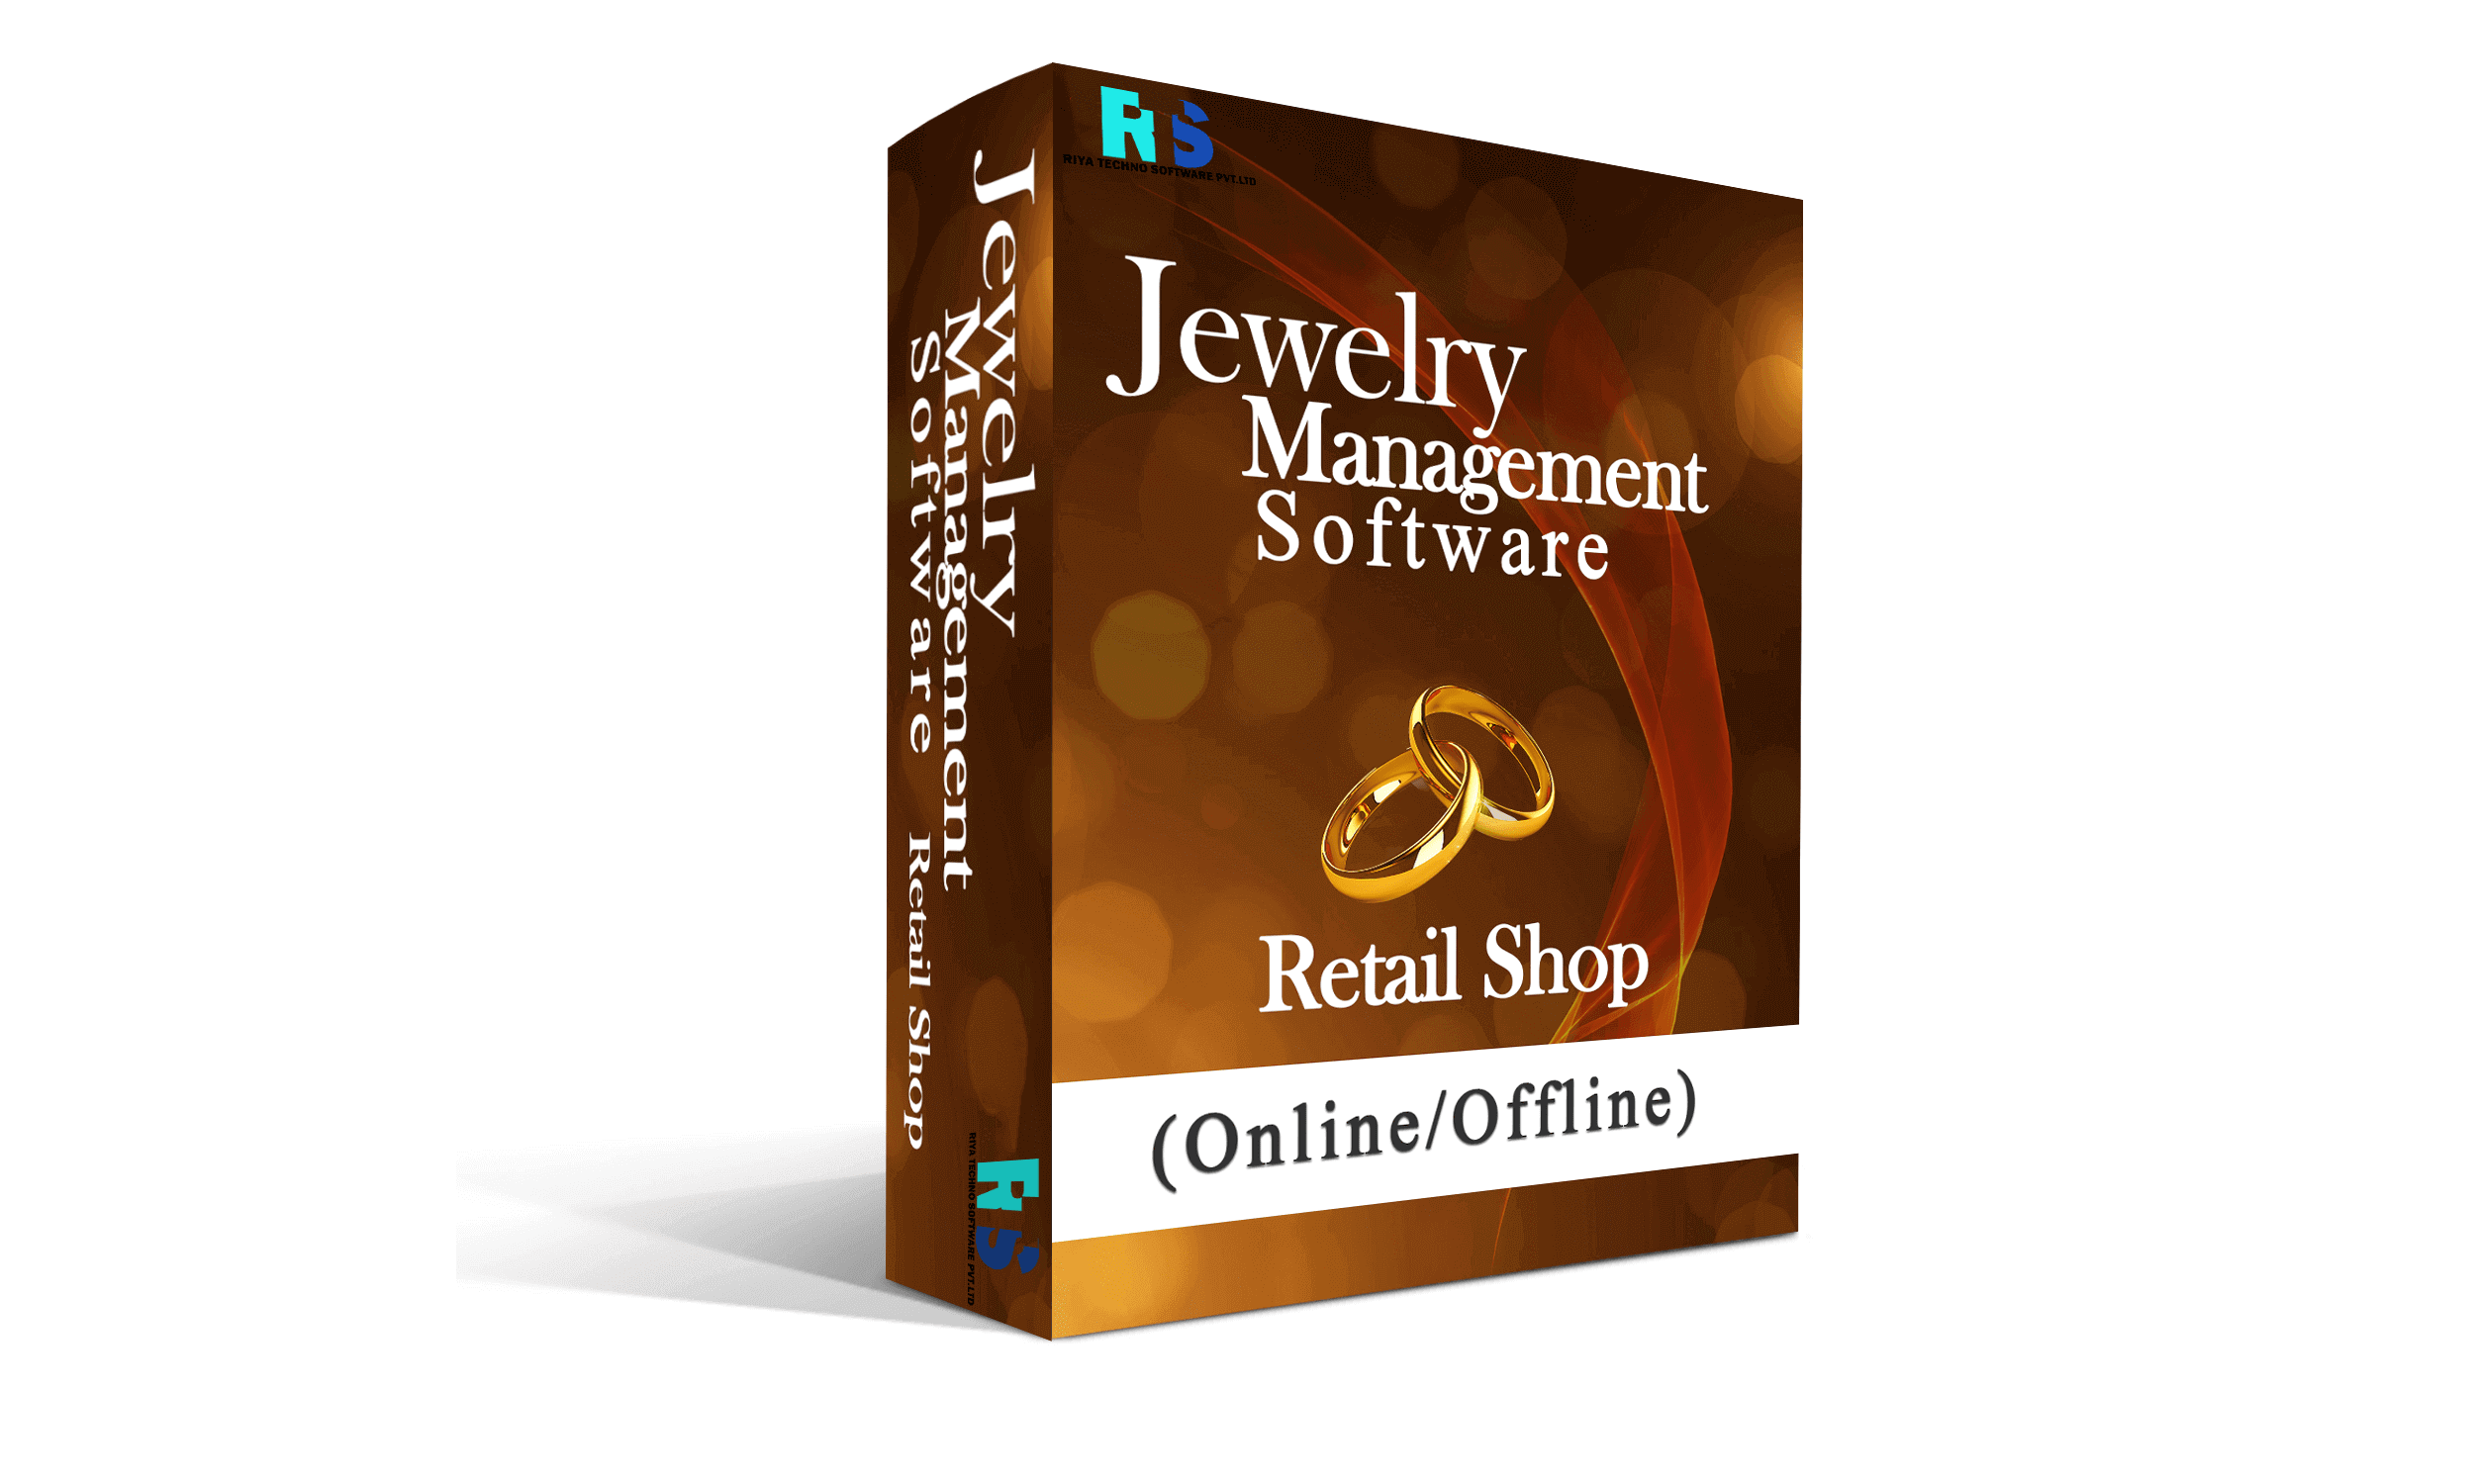 Jewelery Management Software